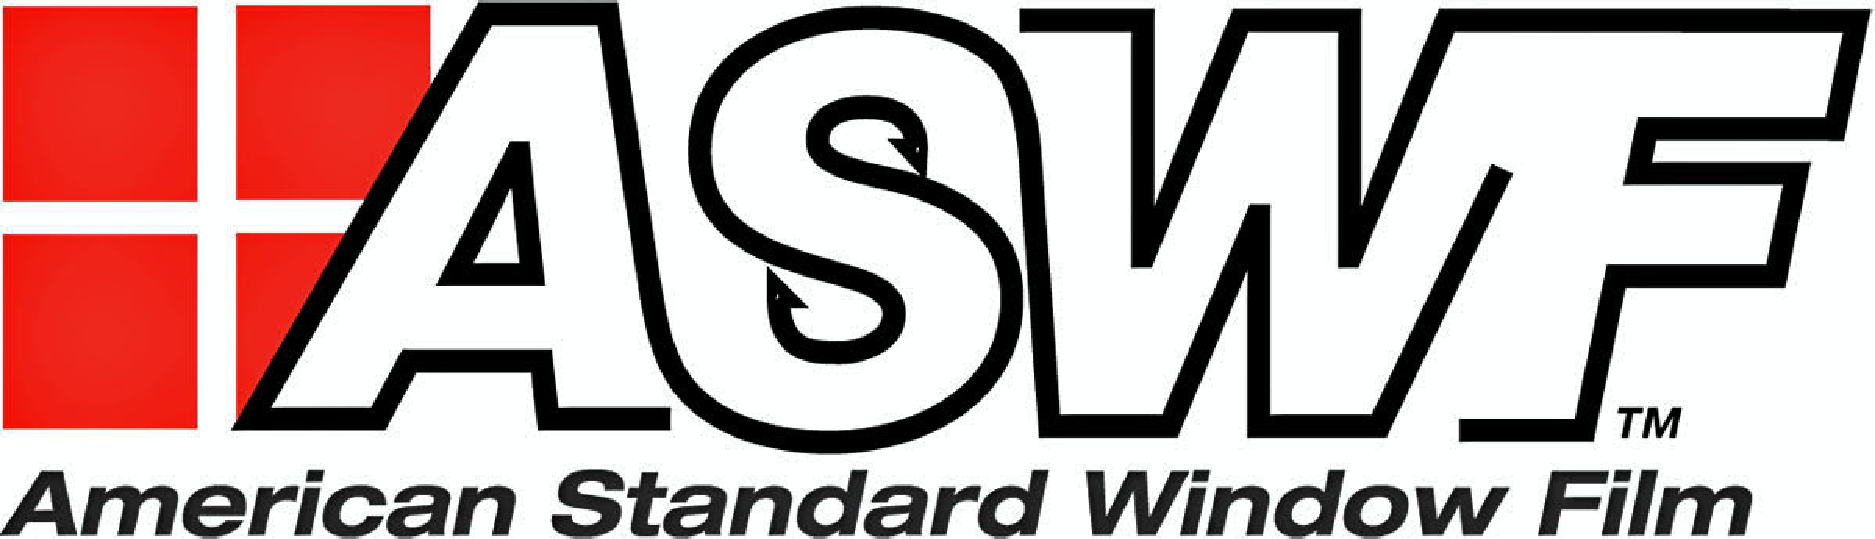 American Standard Window Film Logo Vector